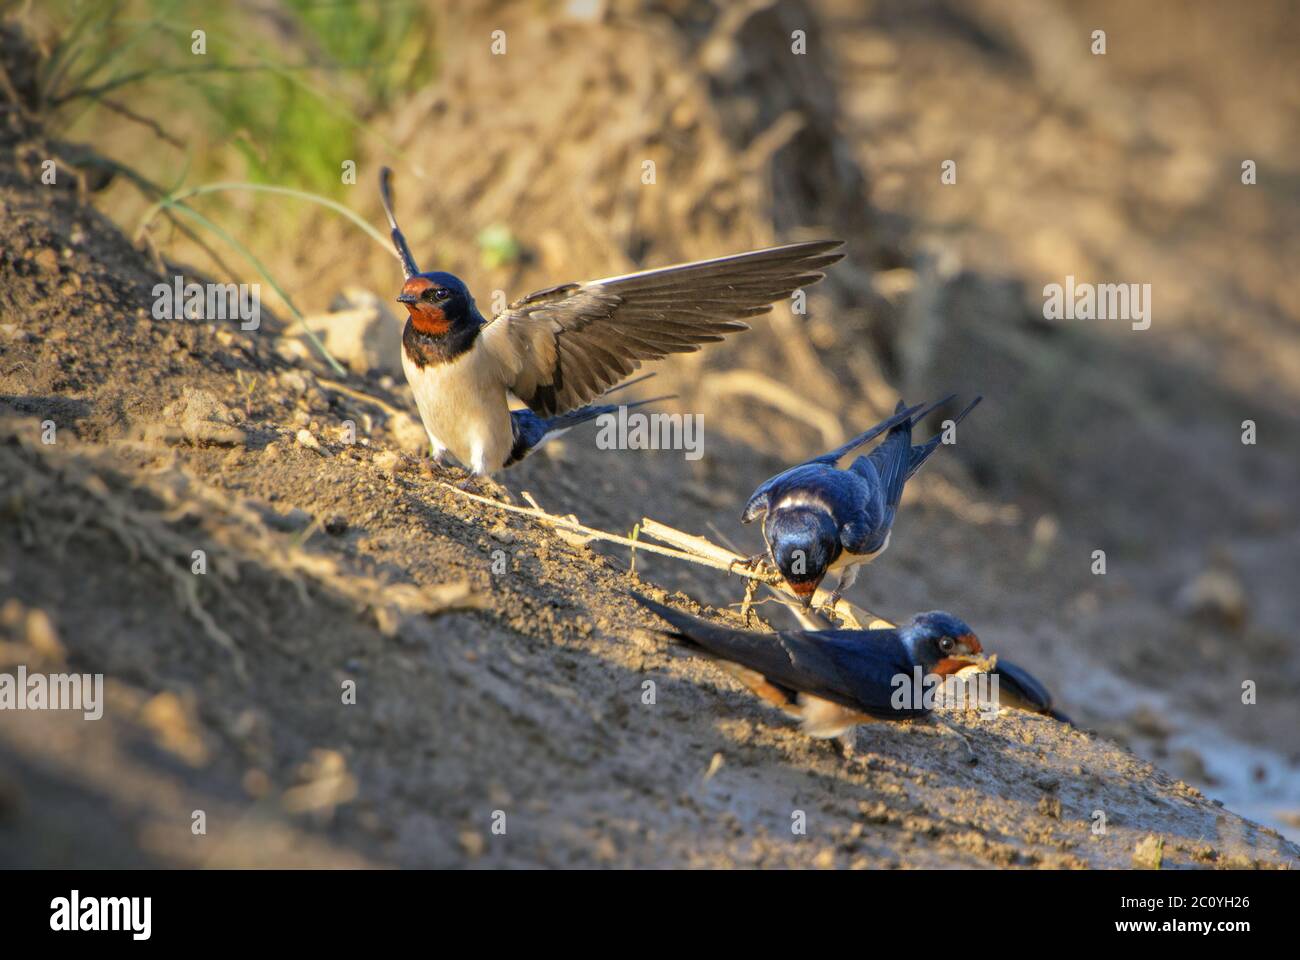 Scheune Swallow - Hirundo rustica, schöner beliebter Barschvogel aus Europa, Insel Pag, Kroatien. Stockfoto